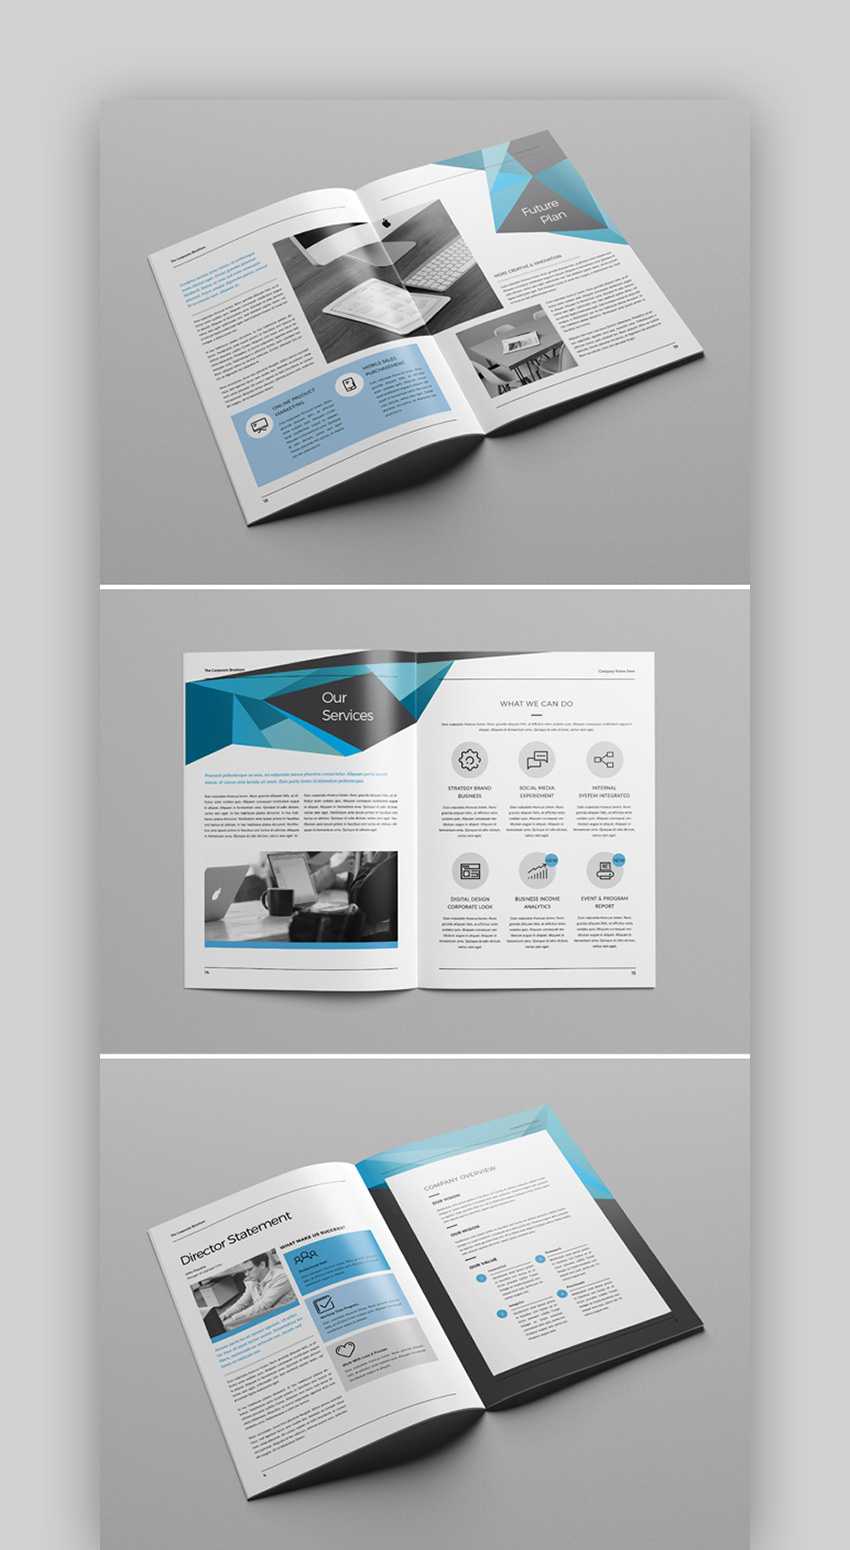 30 Best Indesign Brochure Templates - Creative Business For Adobe Indesign Brochure Templates